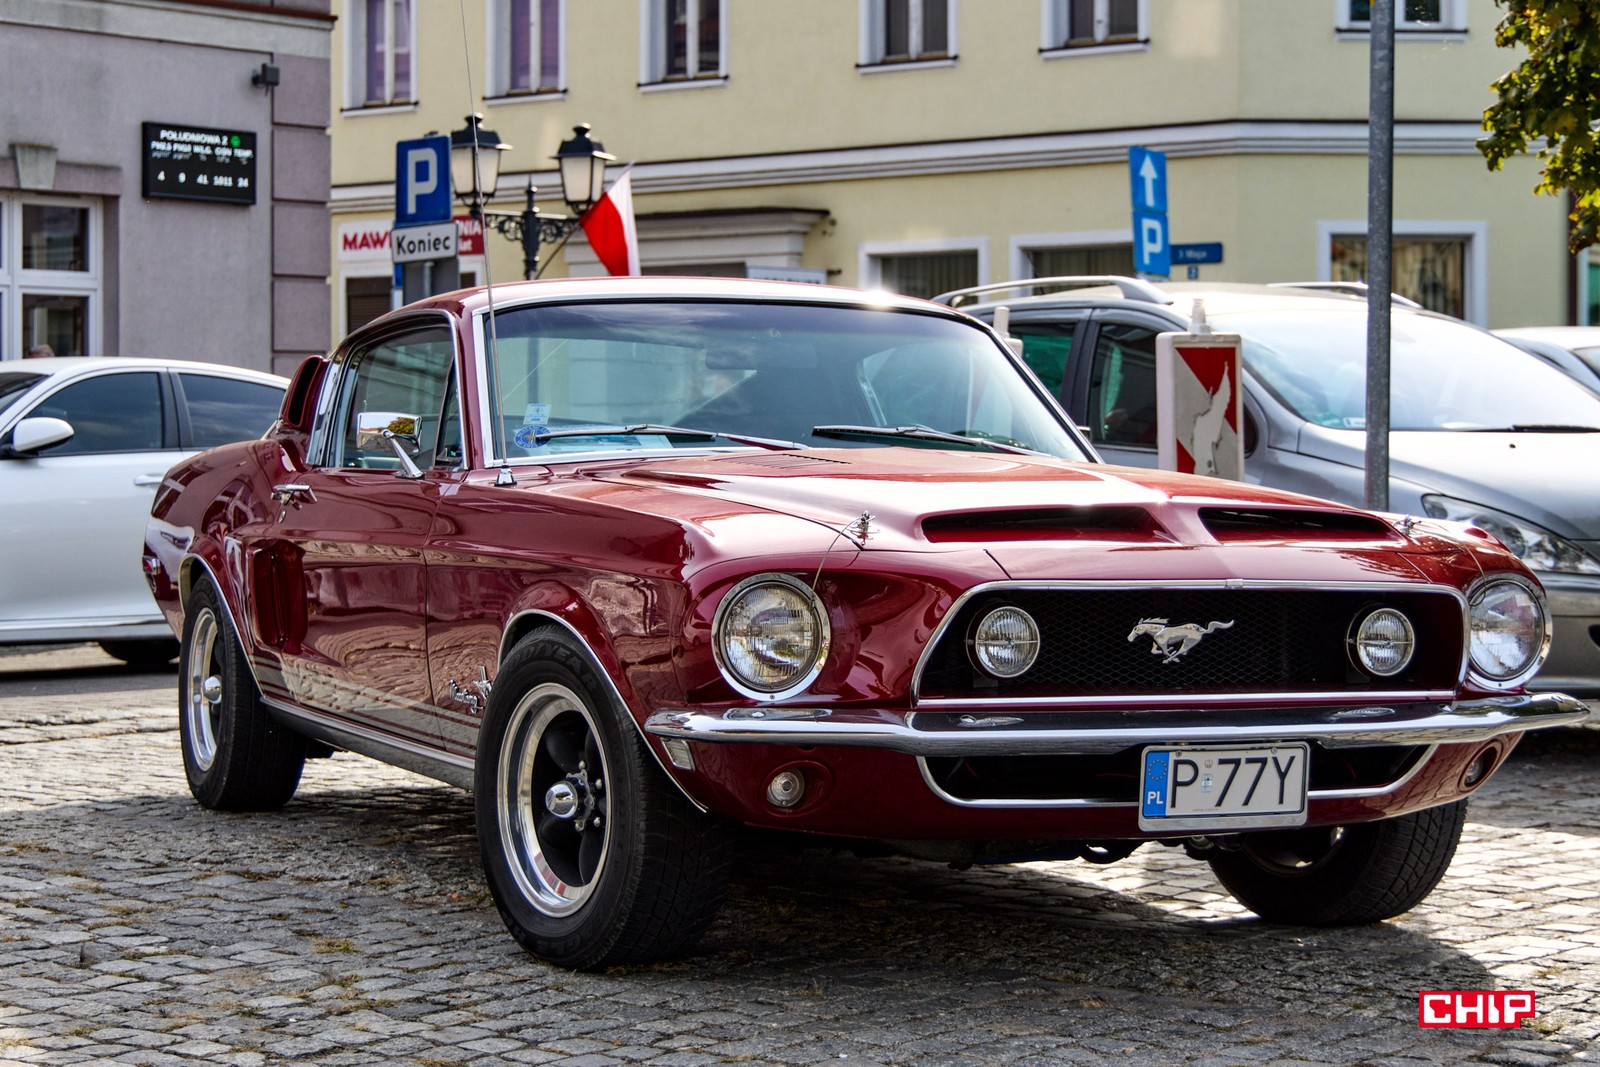 Ford Mustang, fot. Andrzej Libiszewski Chip.pl
